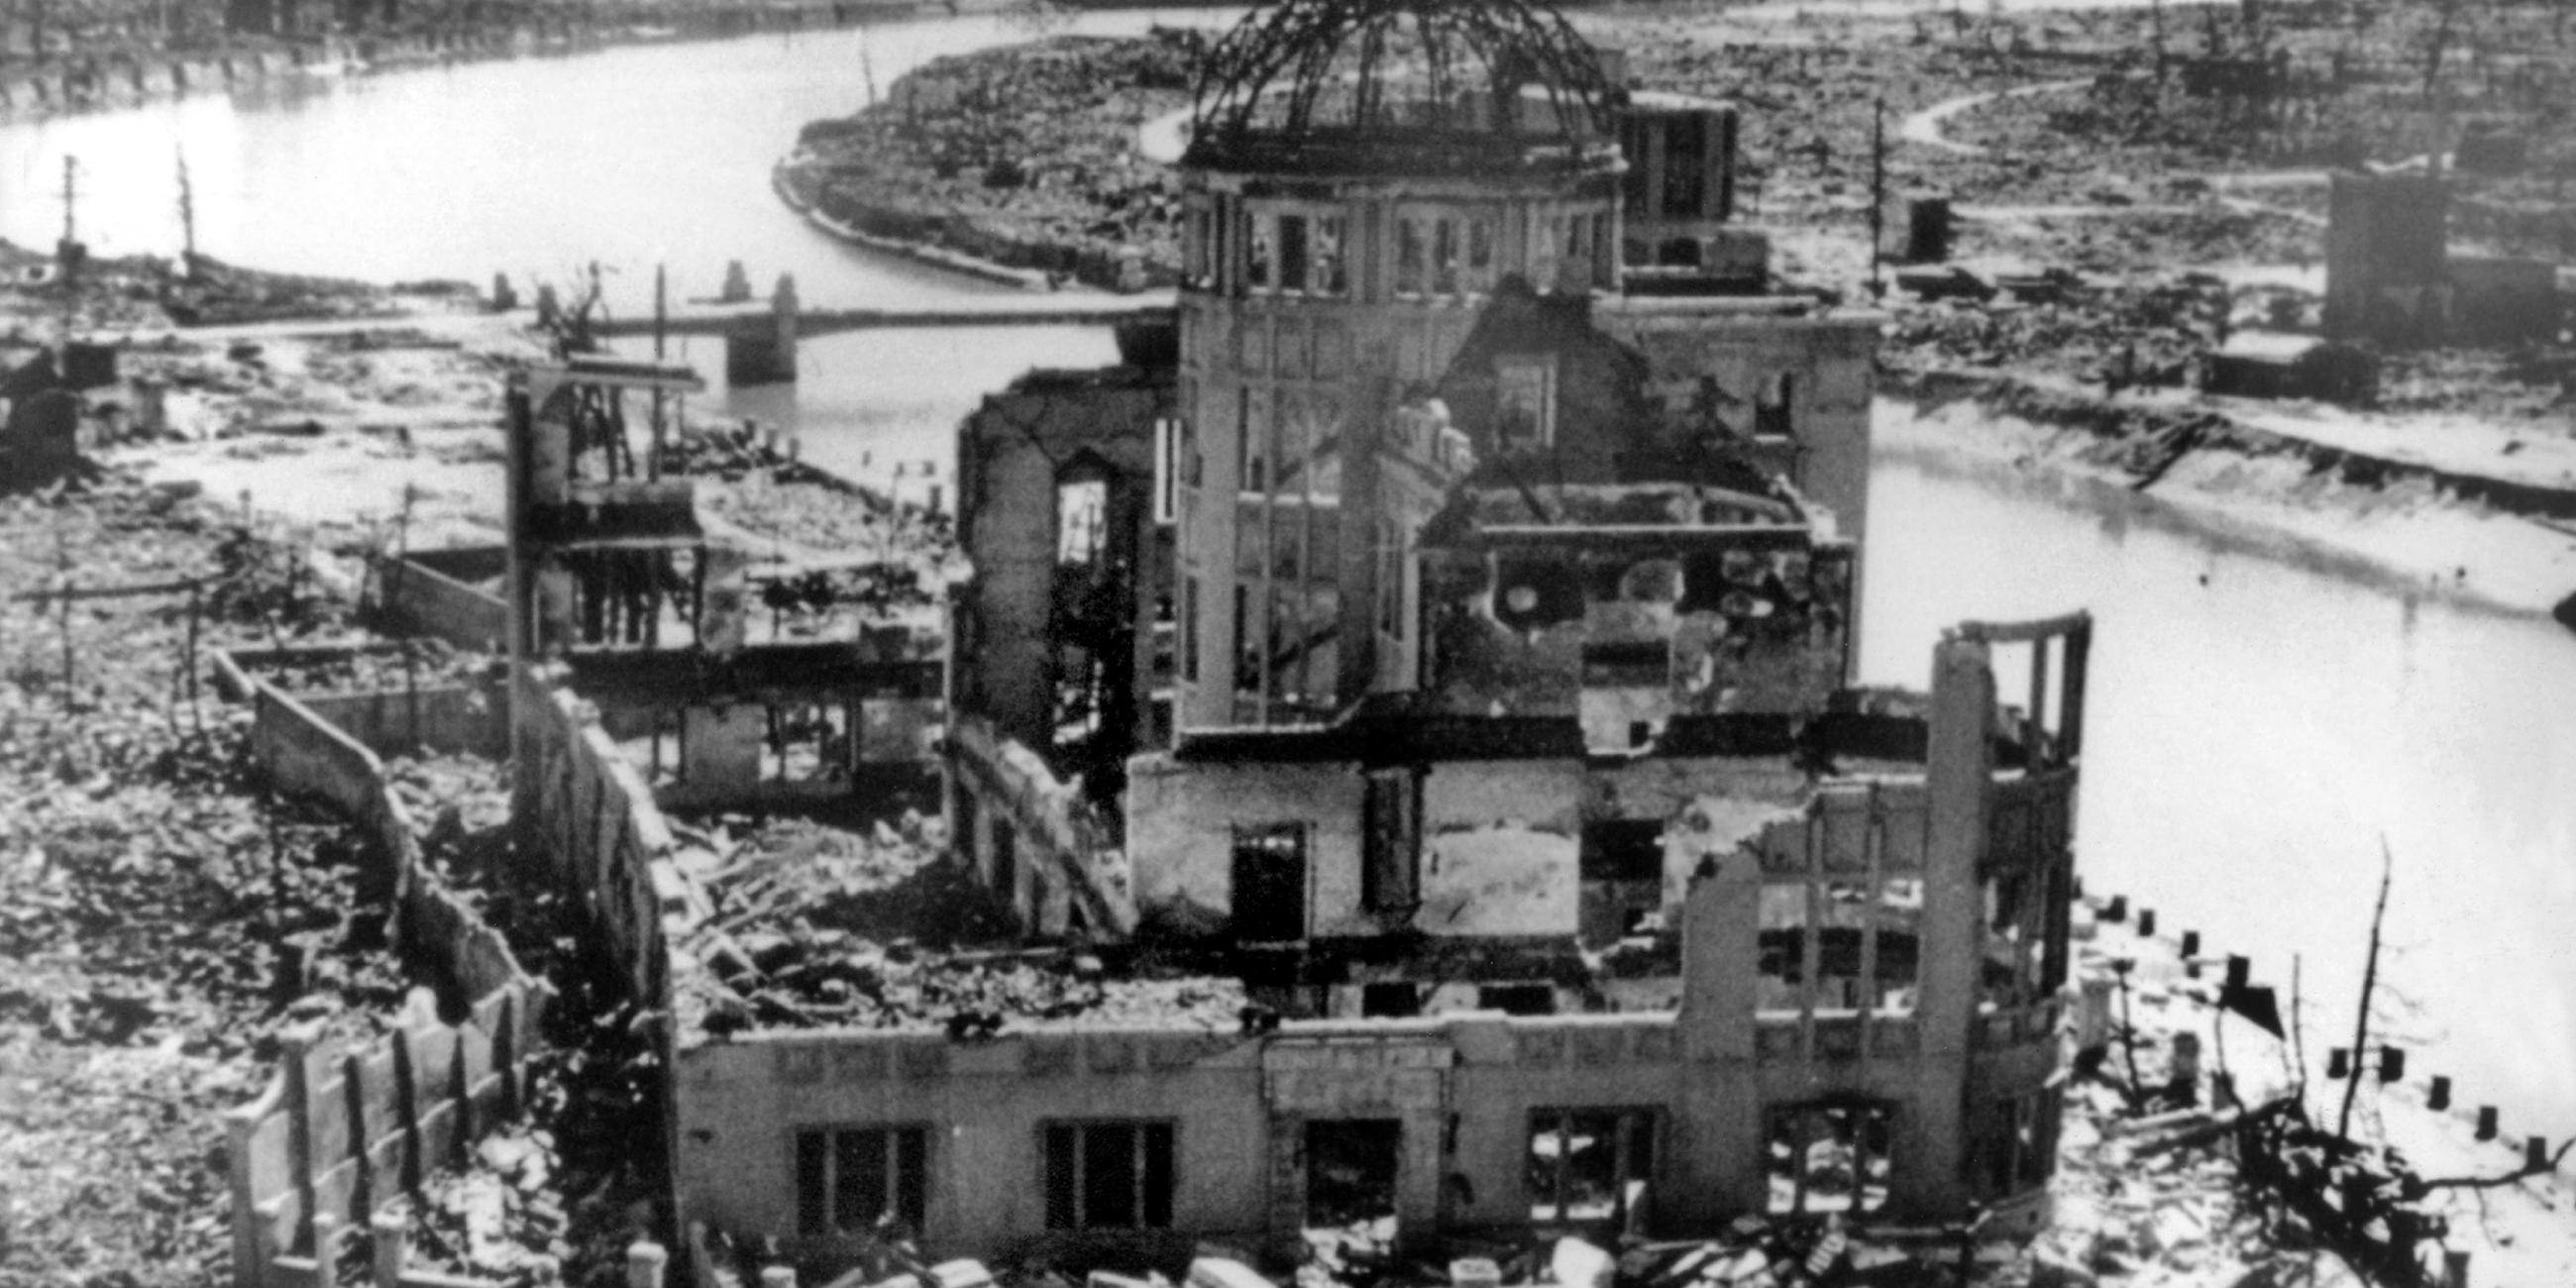 "Spuren des Krieges: Hiroshima 1945": Hiroshima nach dem Atombombenabwurf.